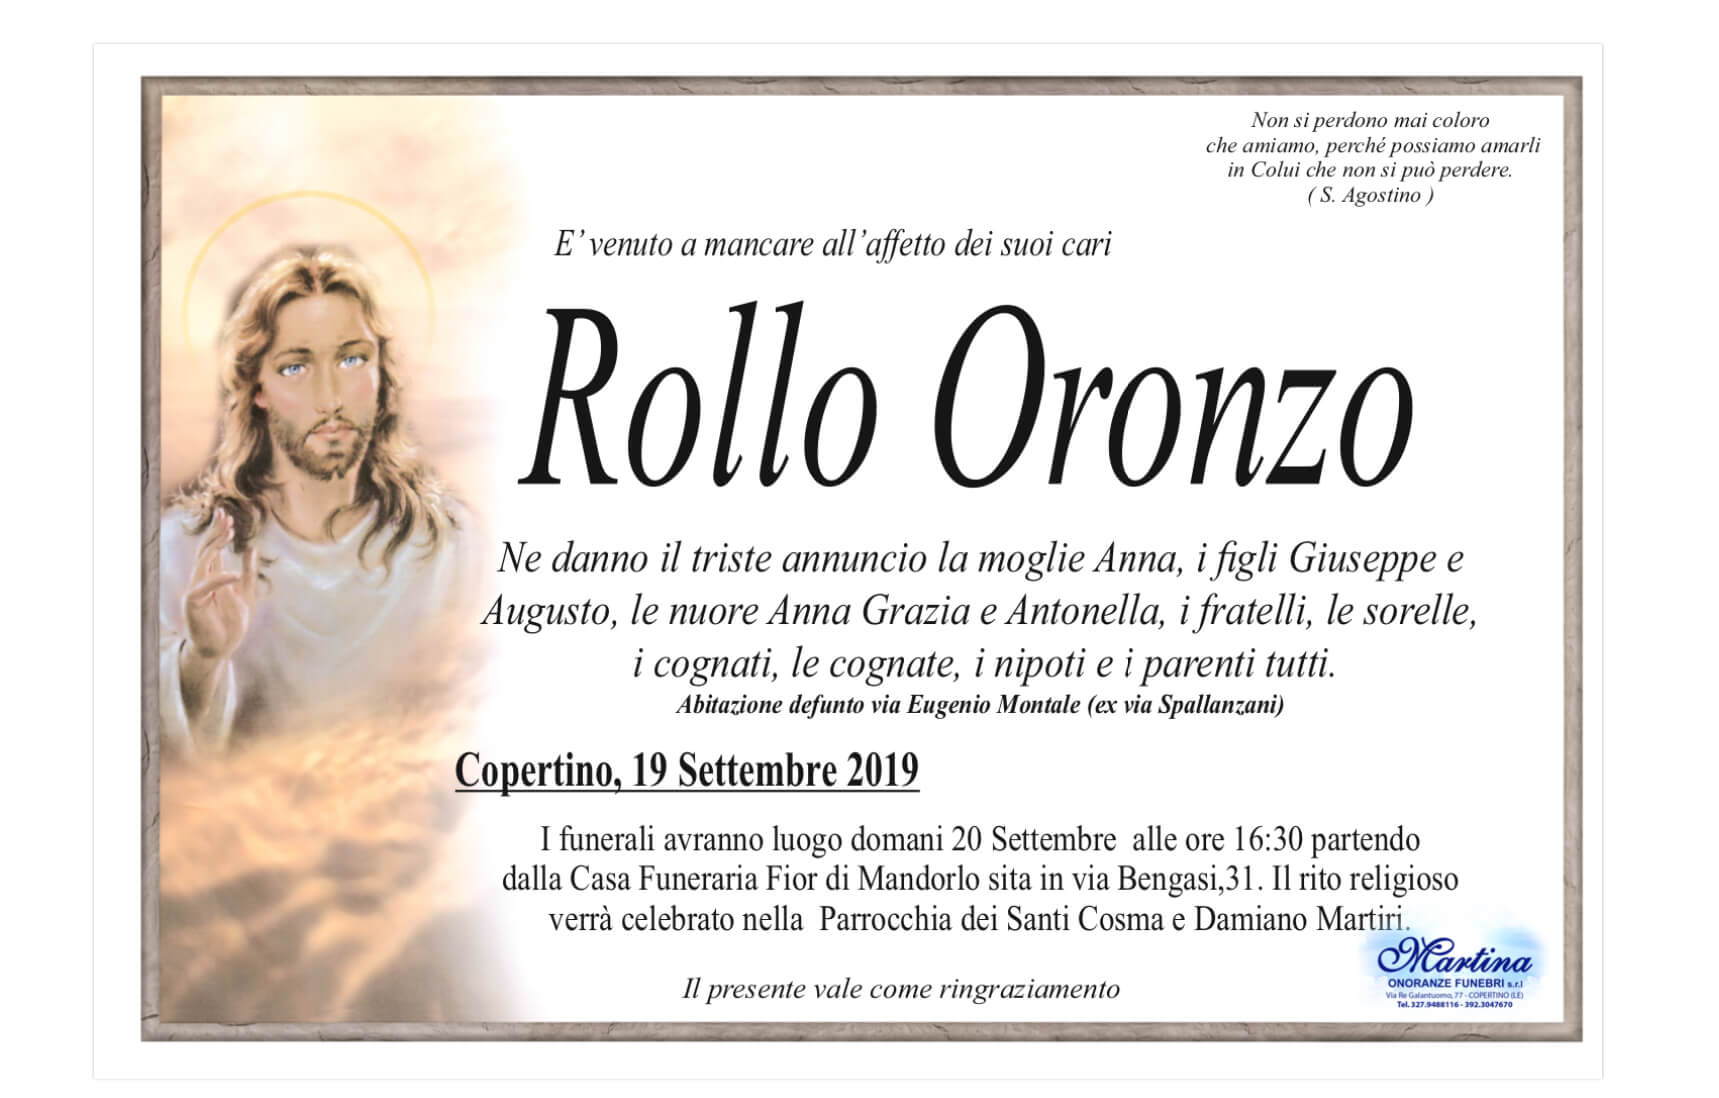 Oronzo Rollo